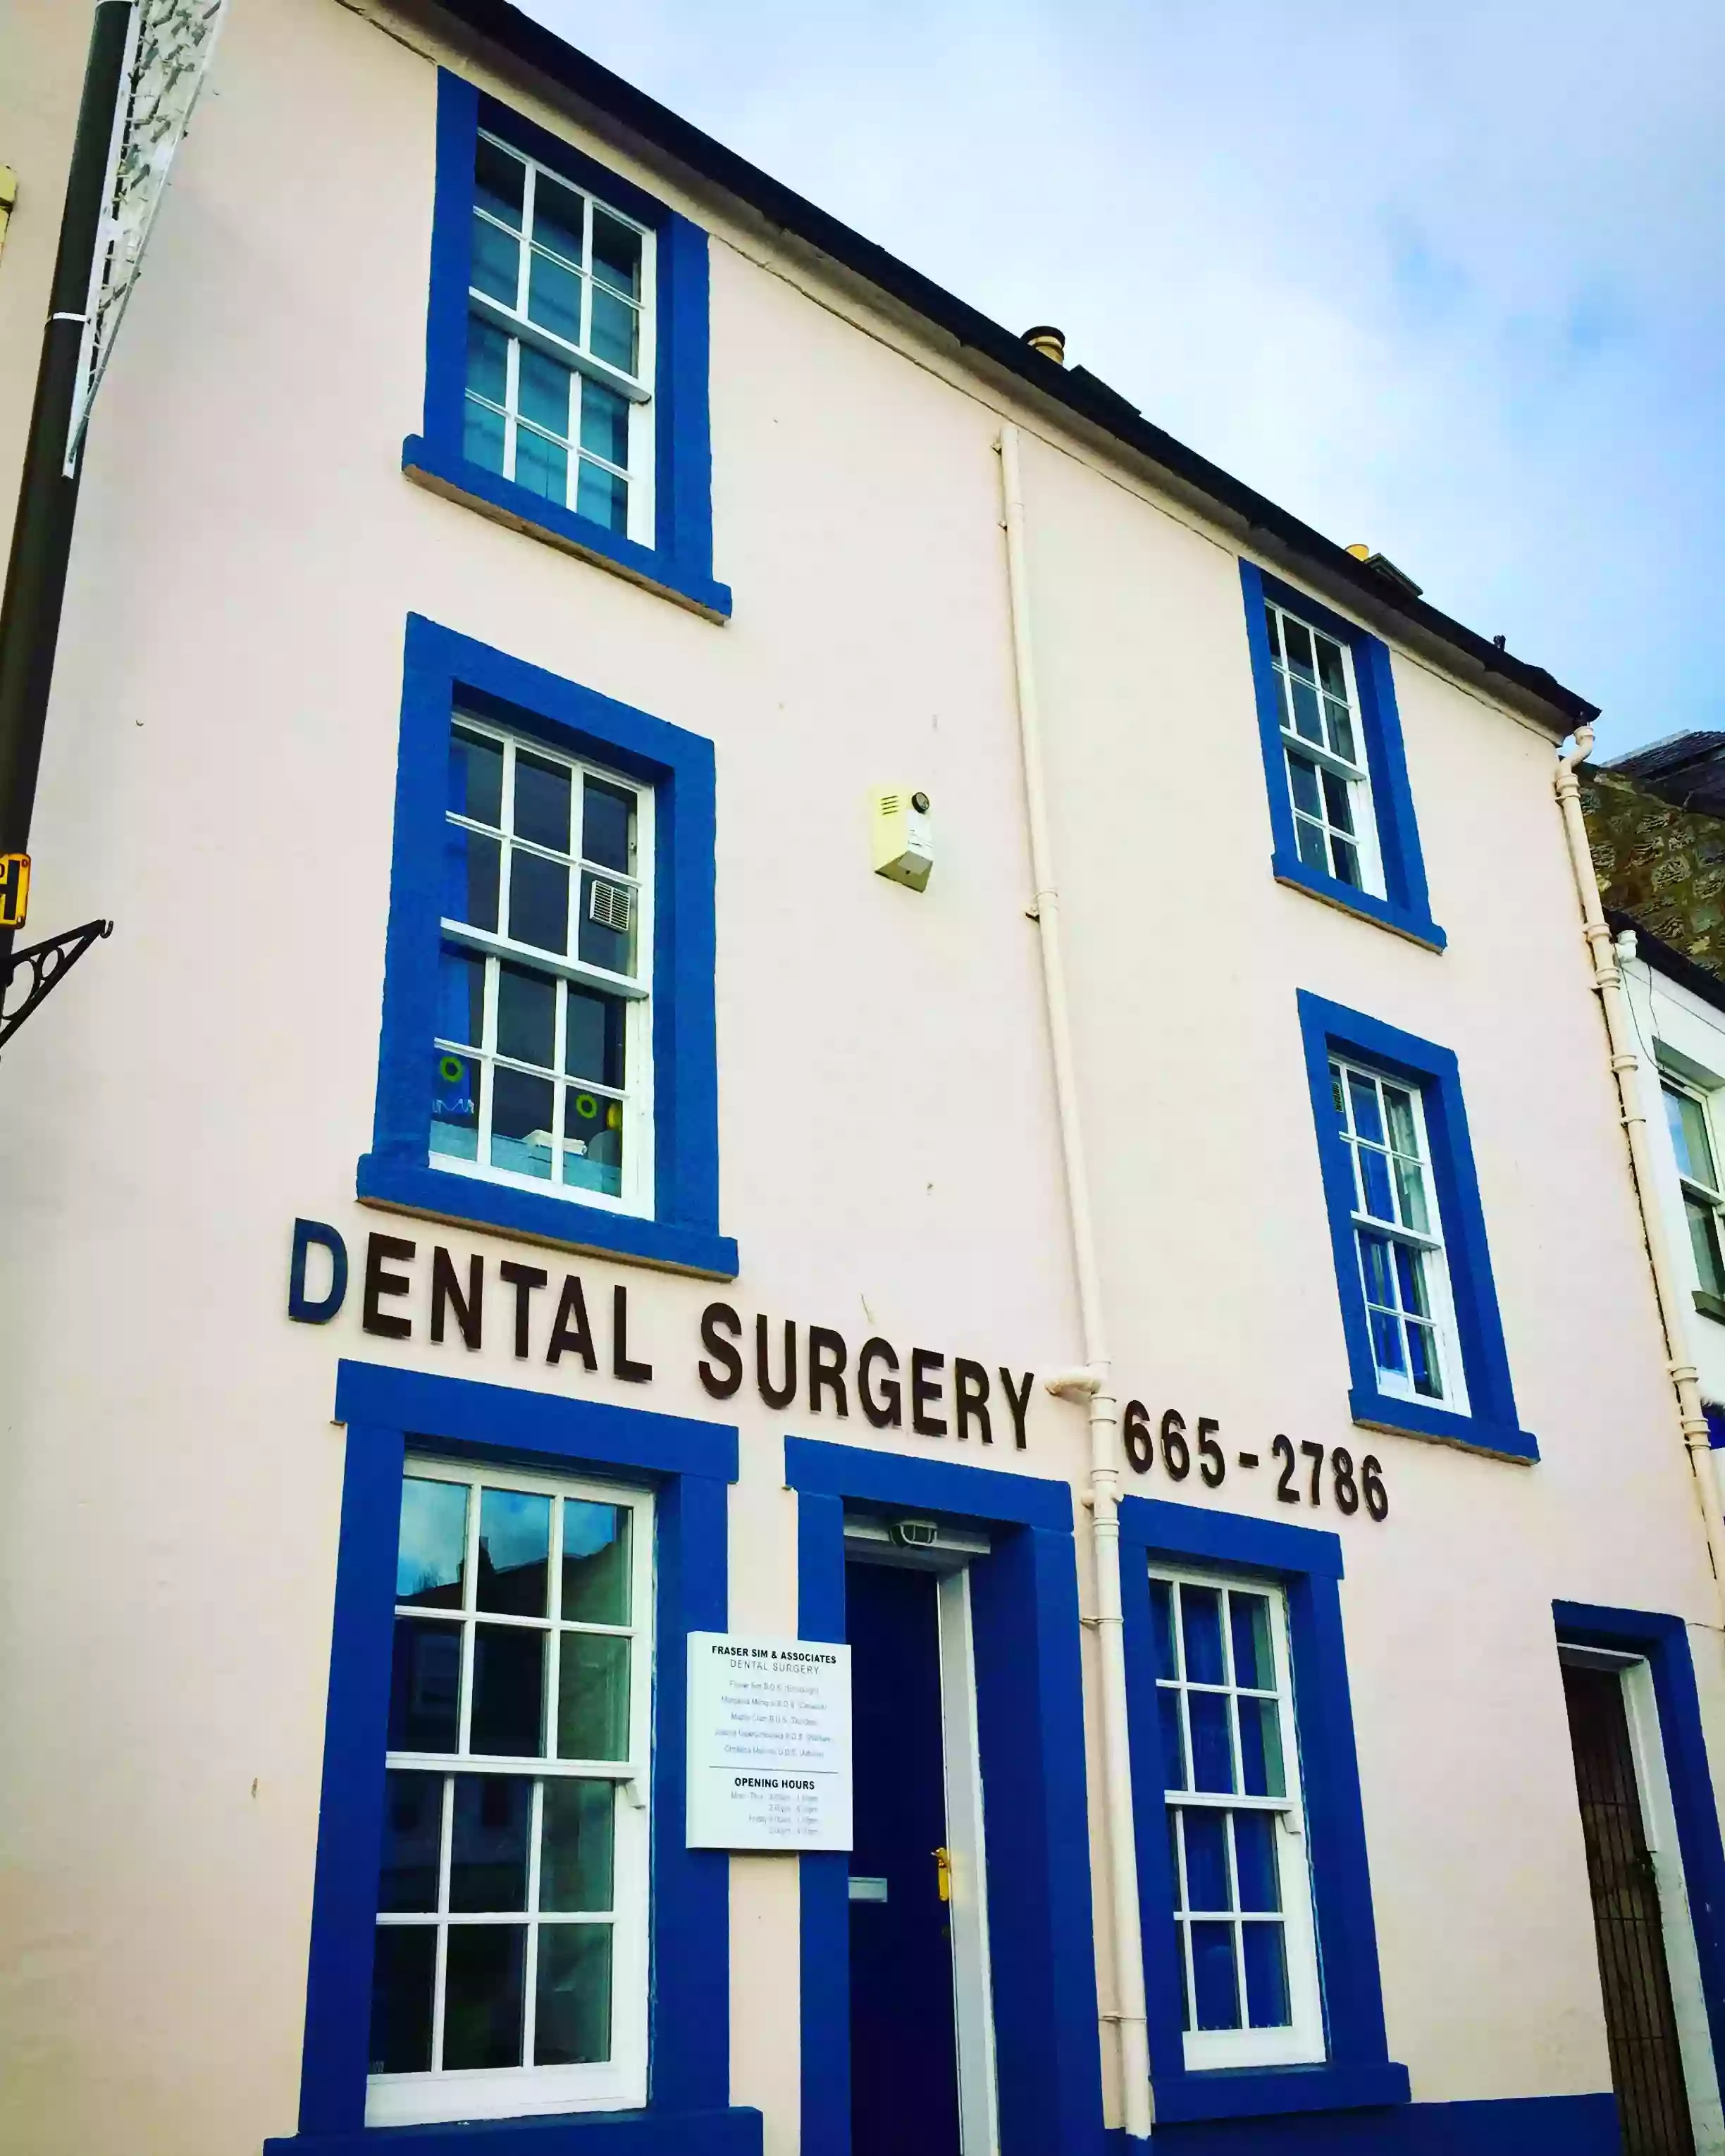 Musselburgh Dental Care